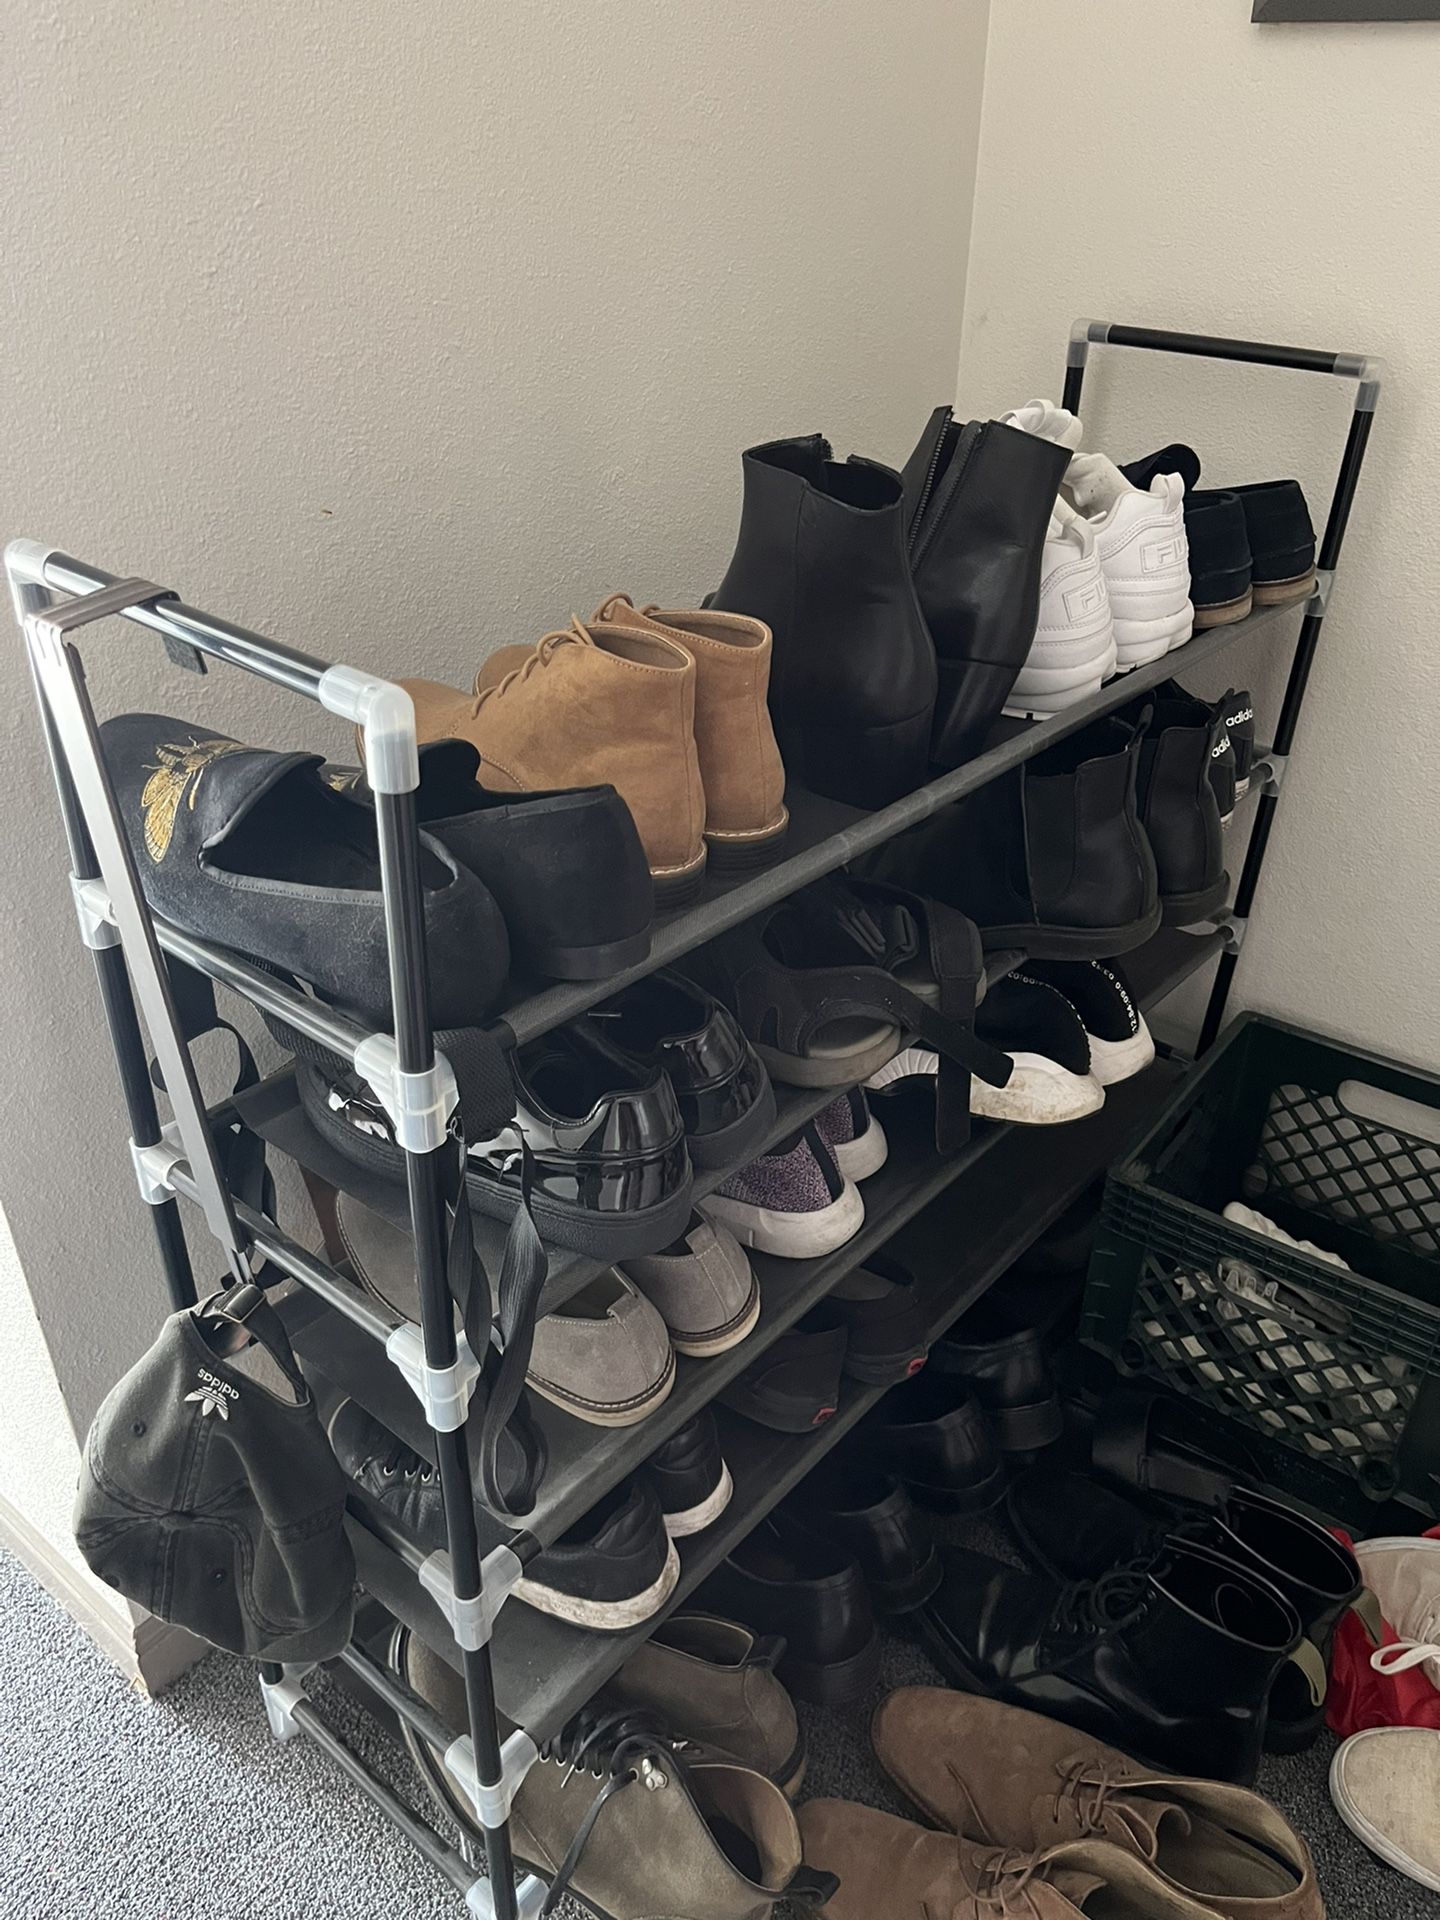 Shoe organizer - Shoe rack and shoes 